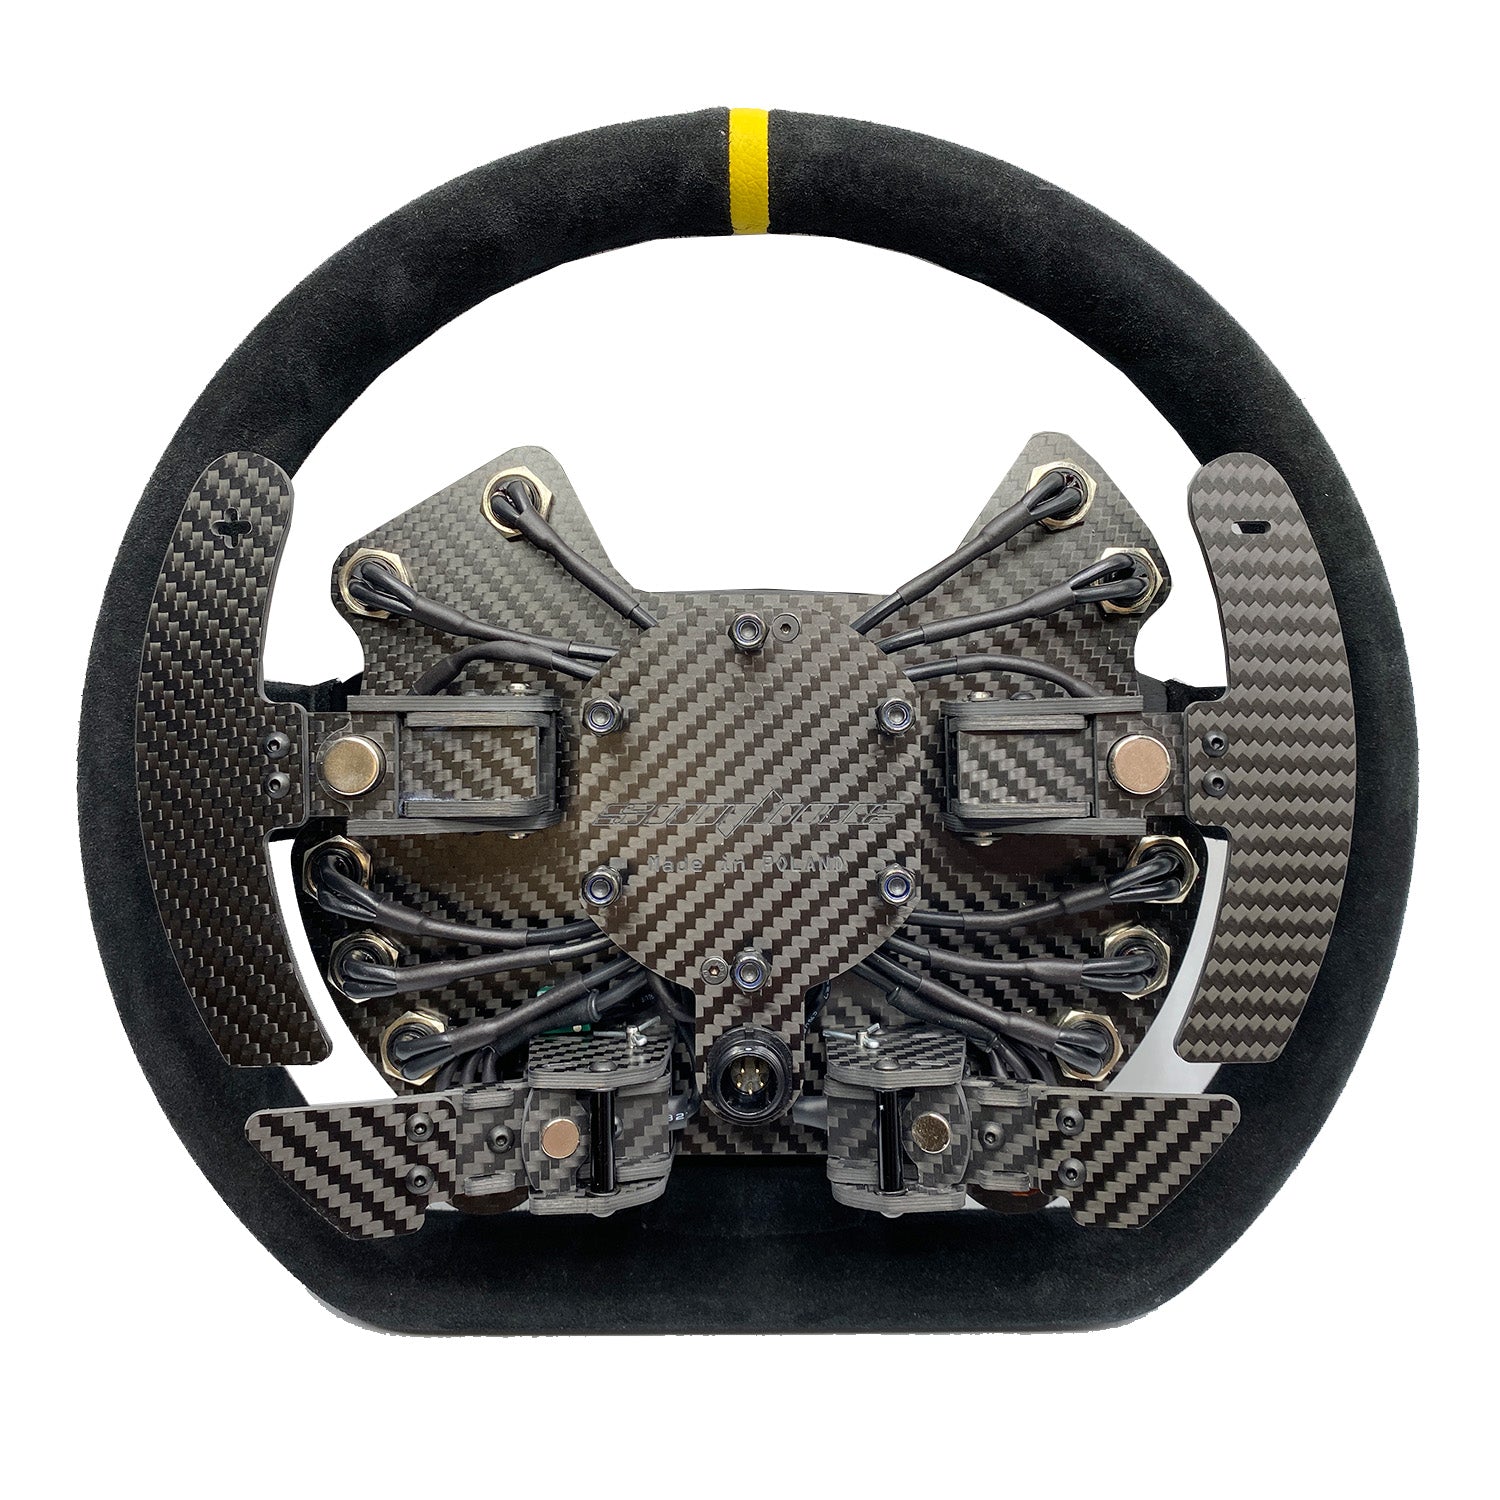 SimLine GT3-R Dual Clutch Replica Wheel (Wired)